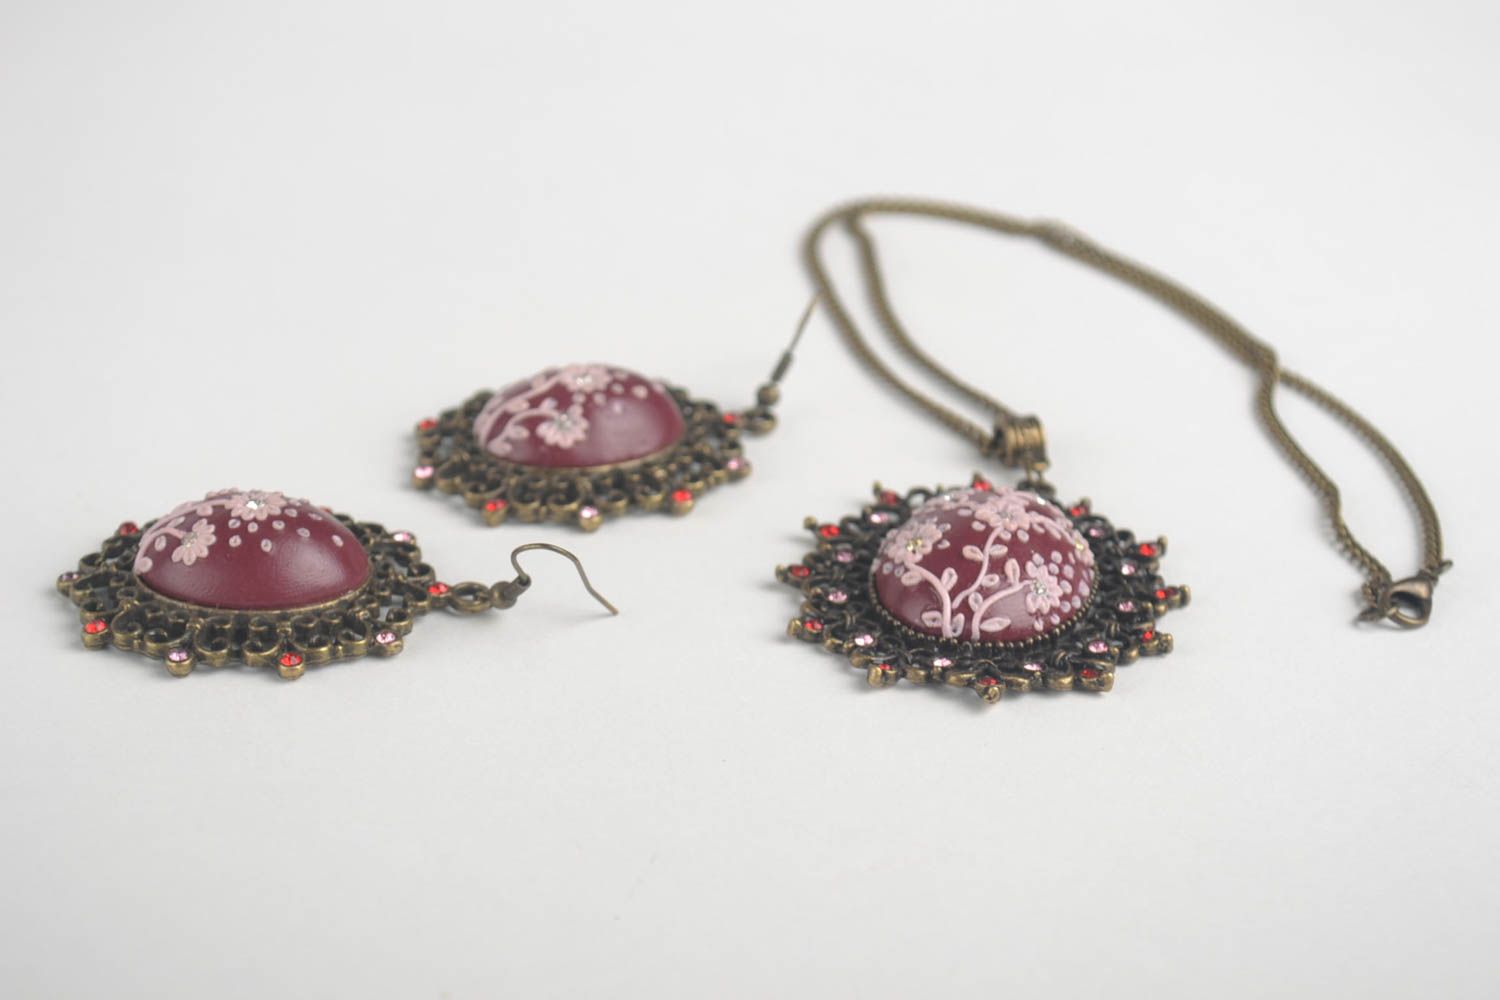 Handmade pendant handmade earrings polymer clay jewelry unusual gift for girl photo 3